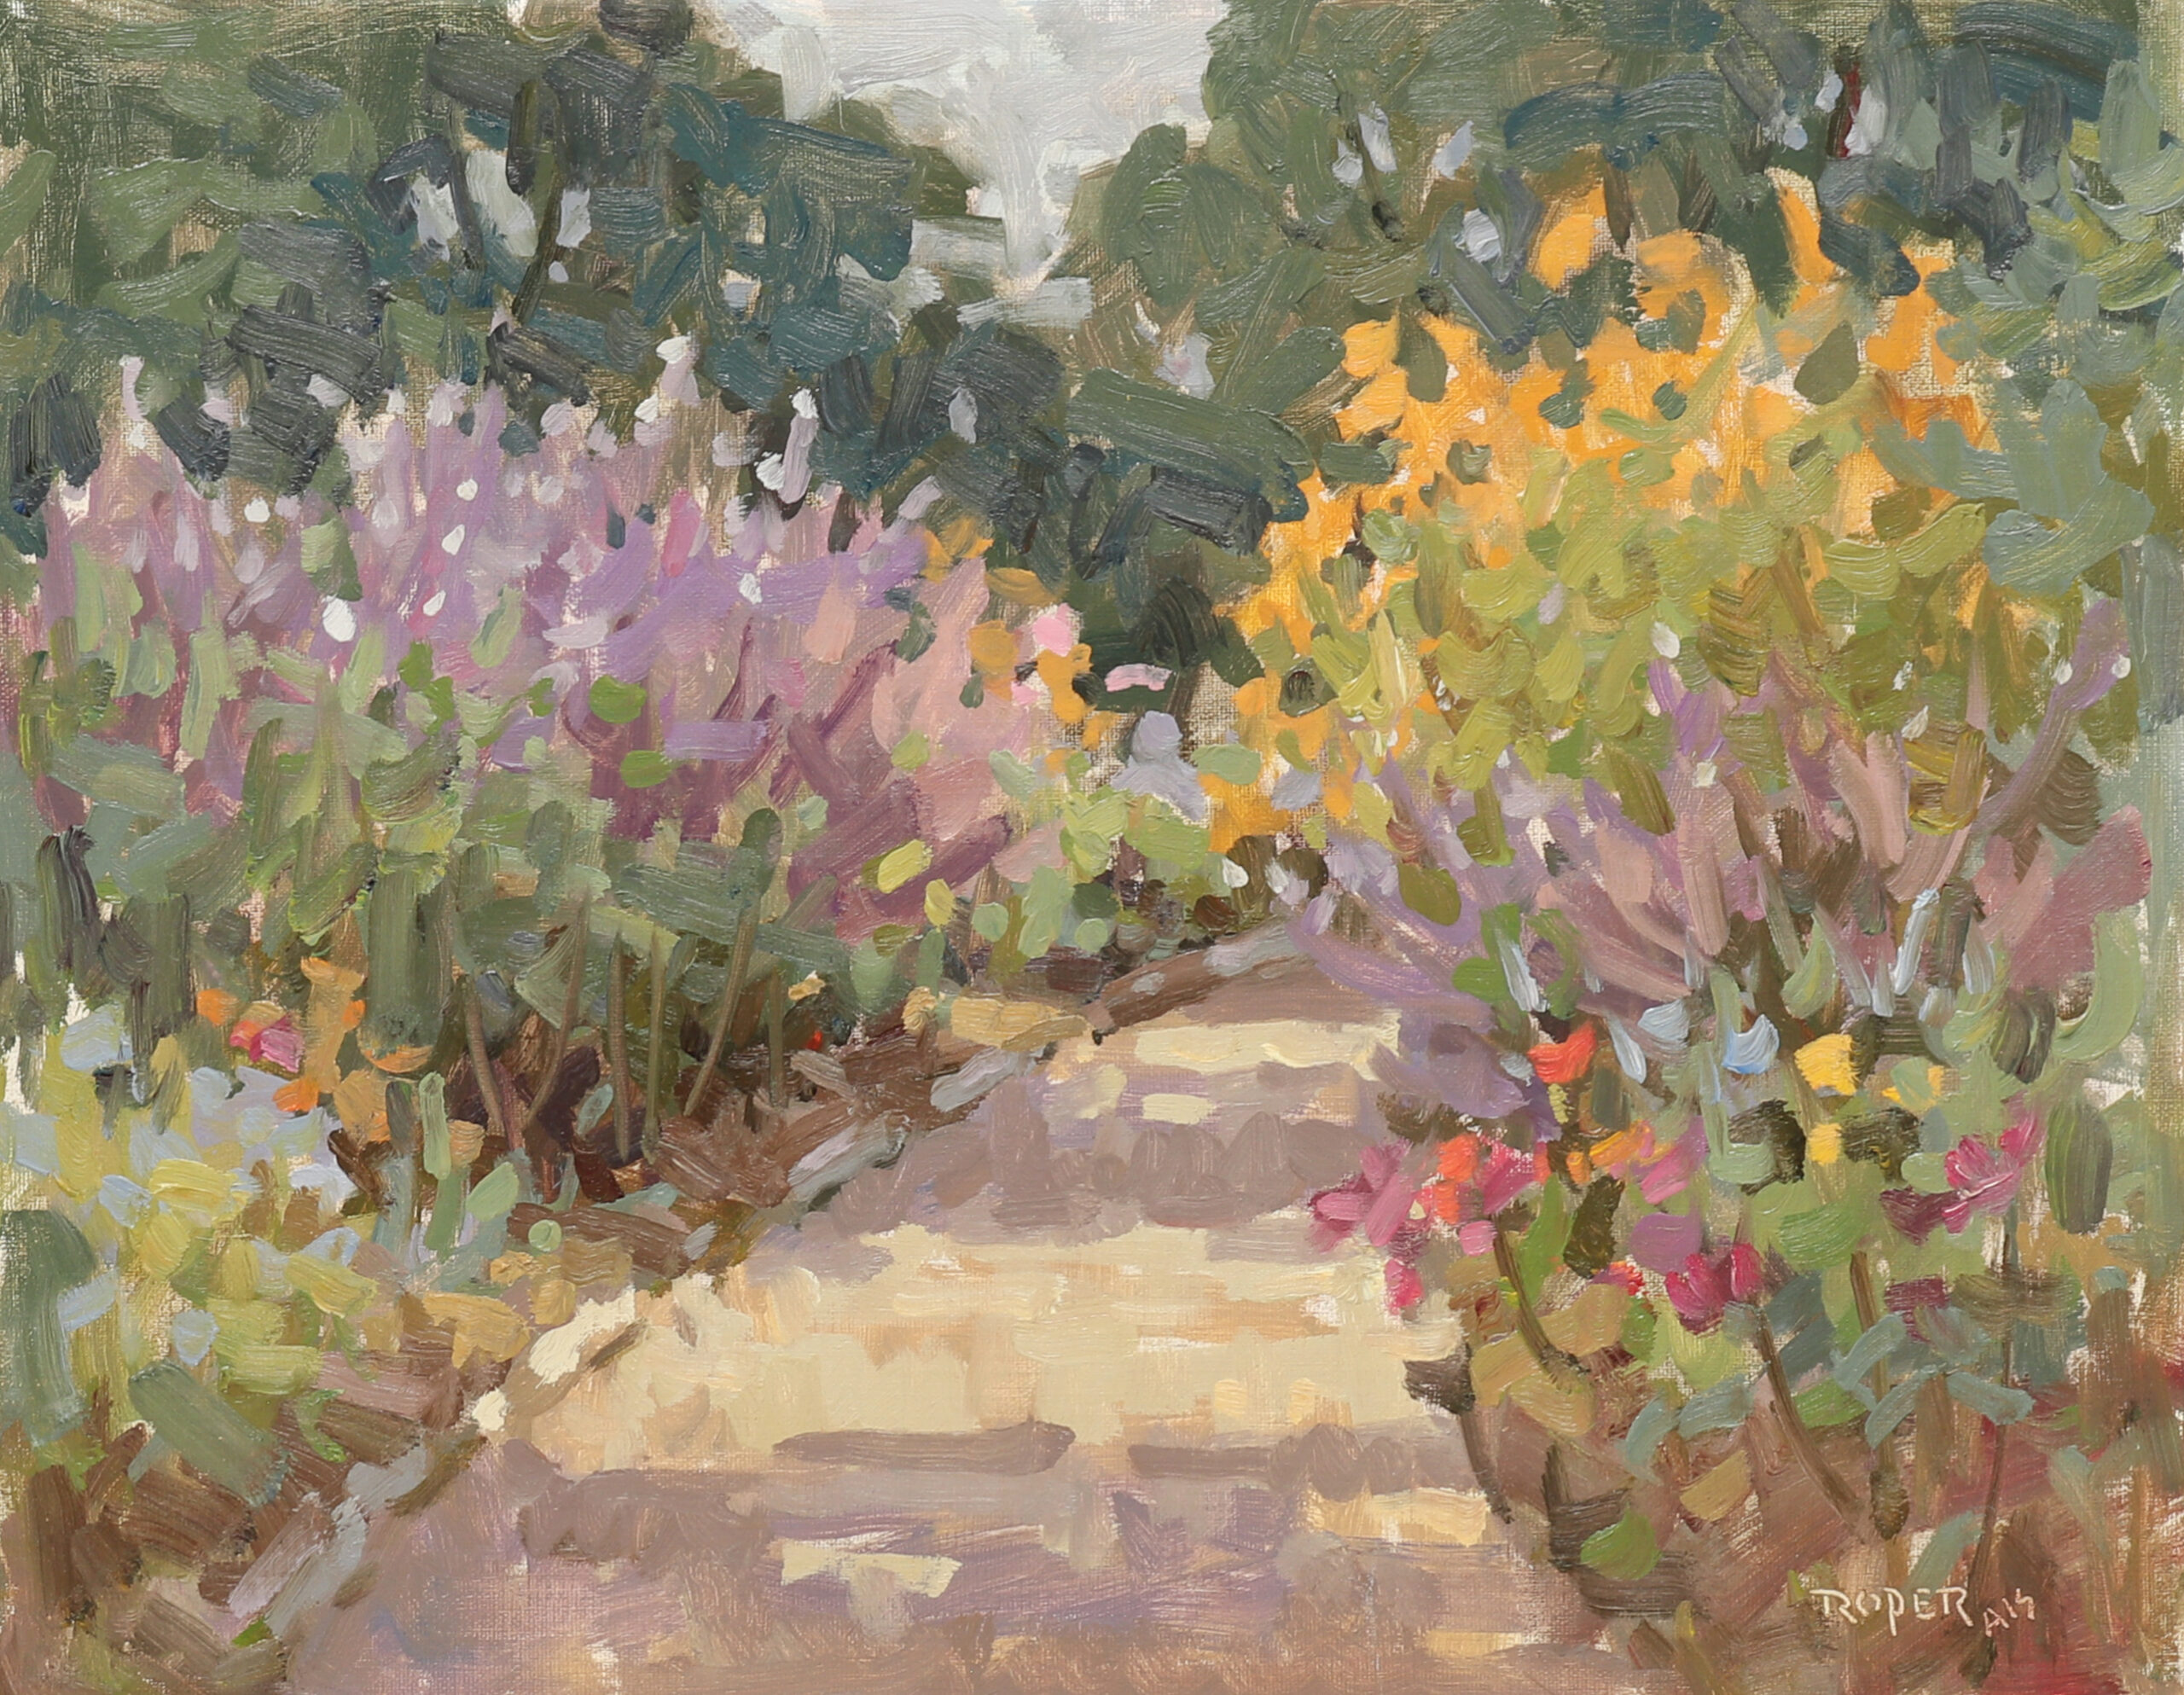 2. Stuart Roper, “Autumn in Clark Gardens,” 2018, oil, 11 x 14 in., Available from artist, Plein air